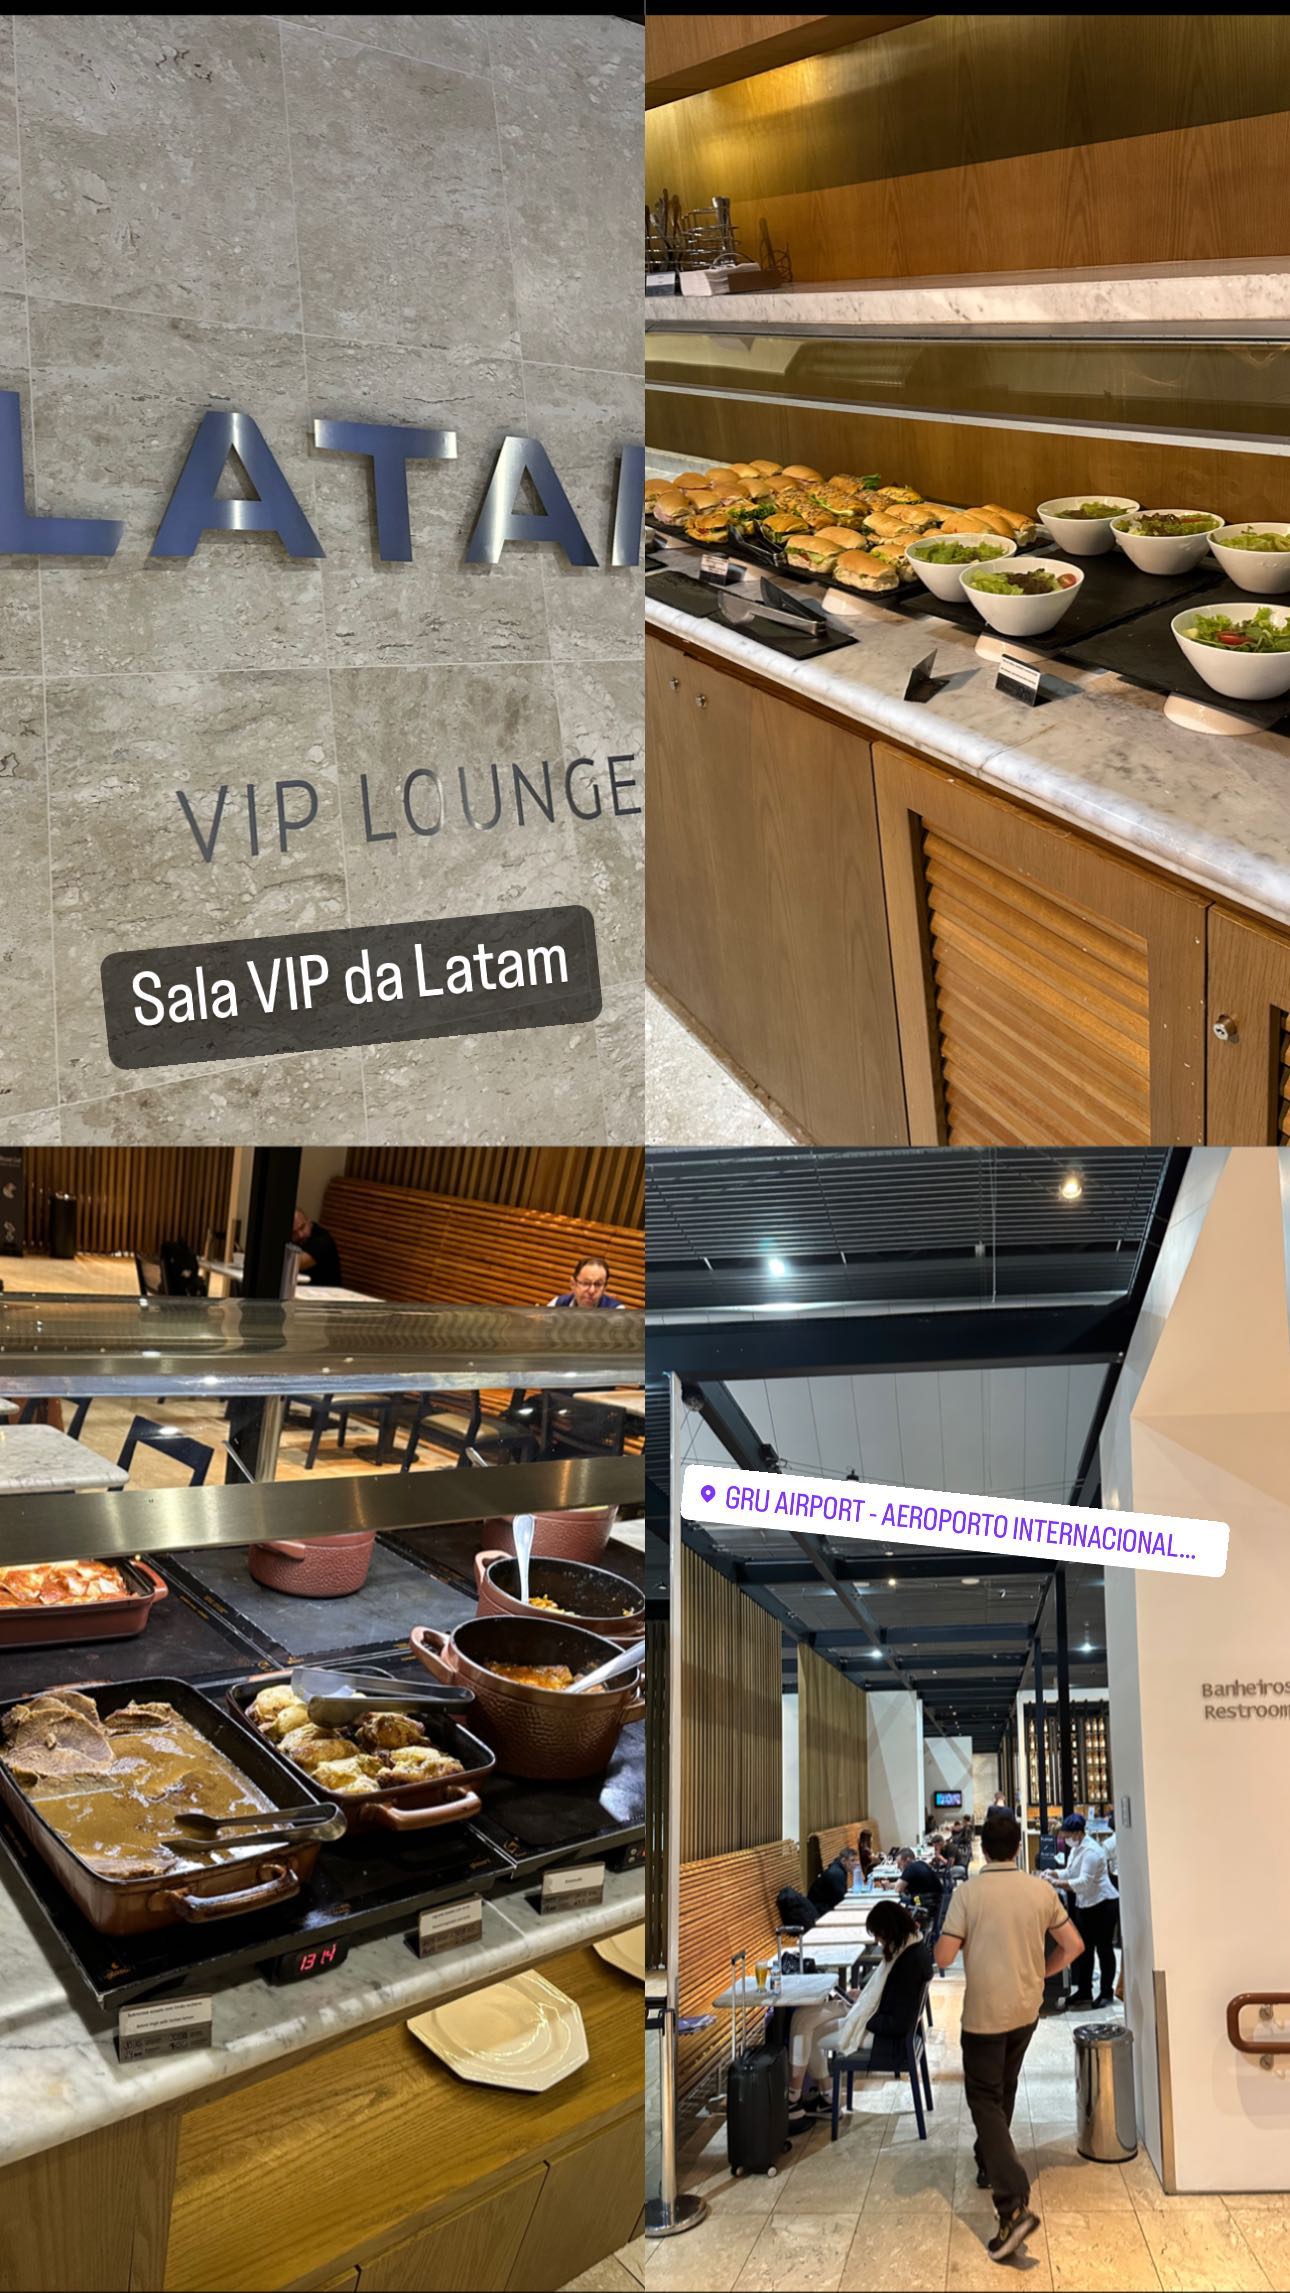 LATAM VIP Lounge